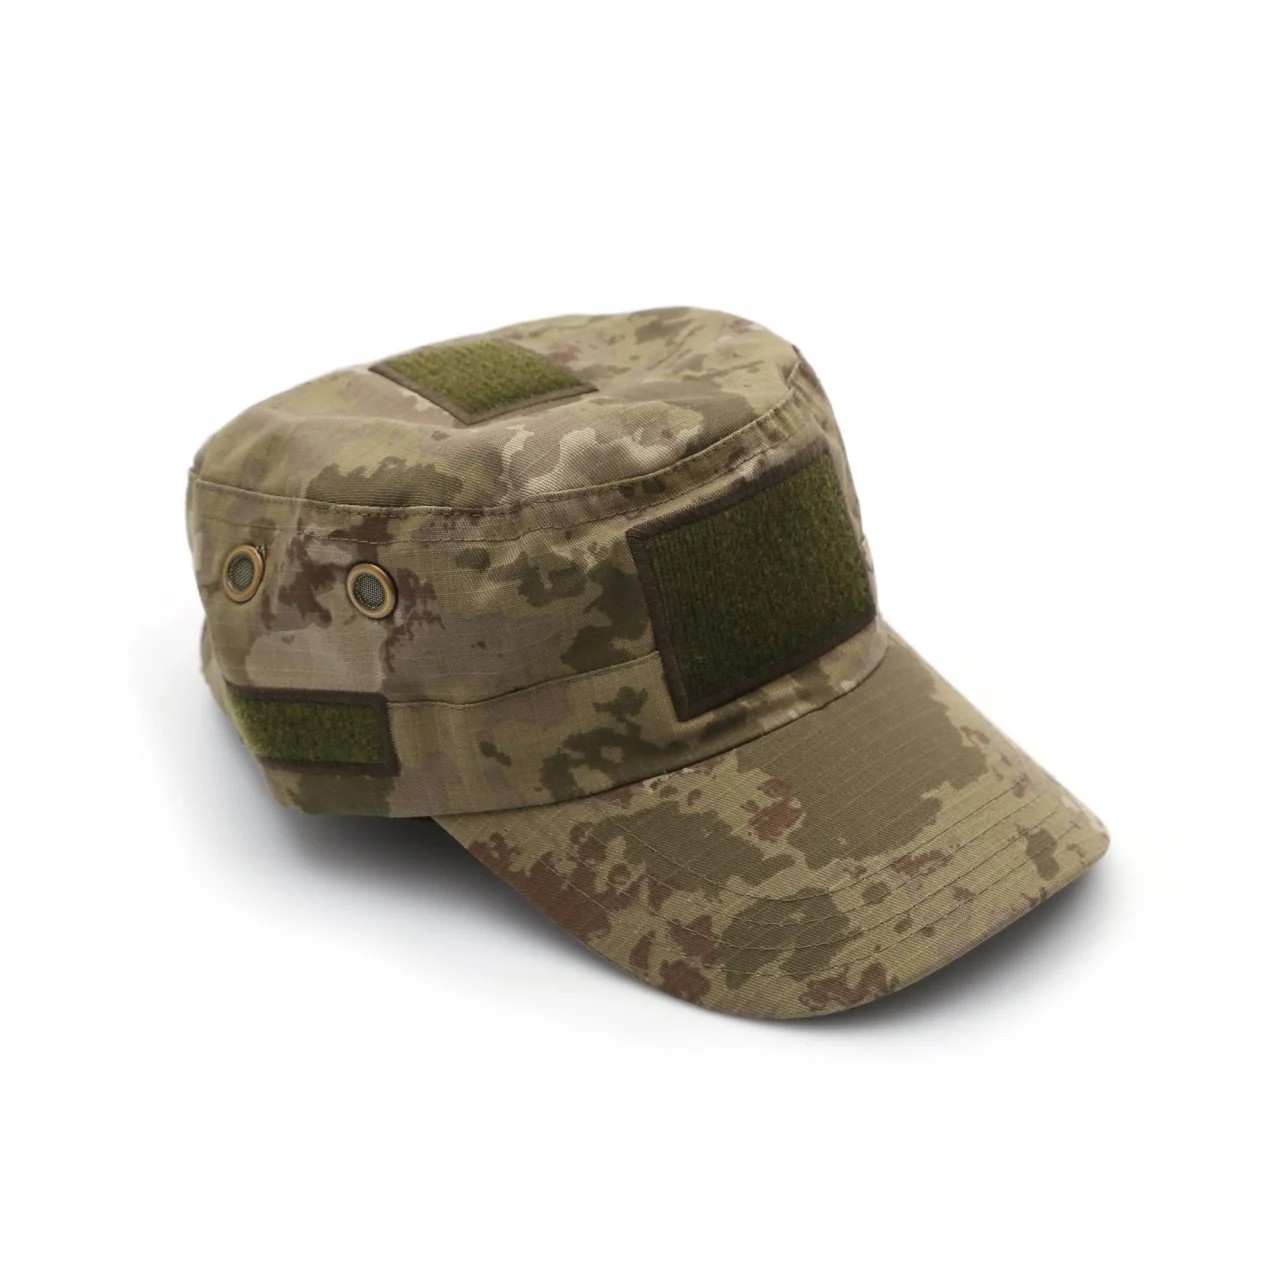 Kara Kuvvetleri Kamuflaj Operasyon Şapka Kep